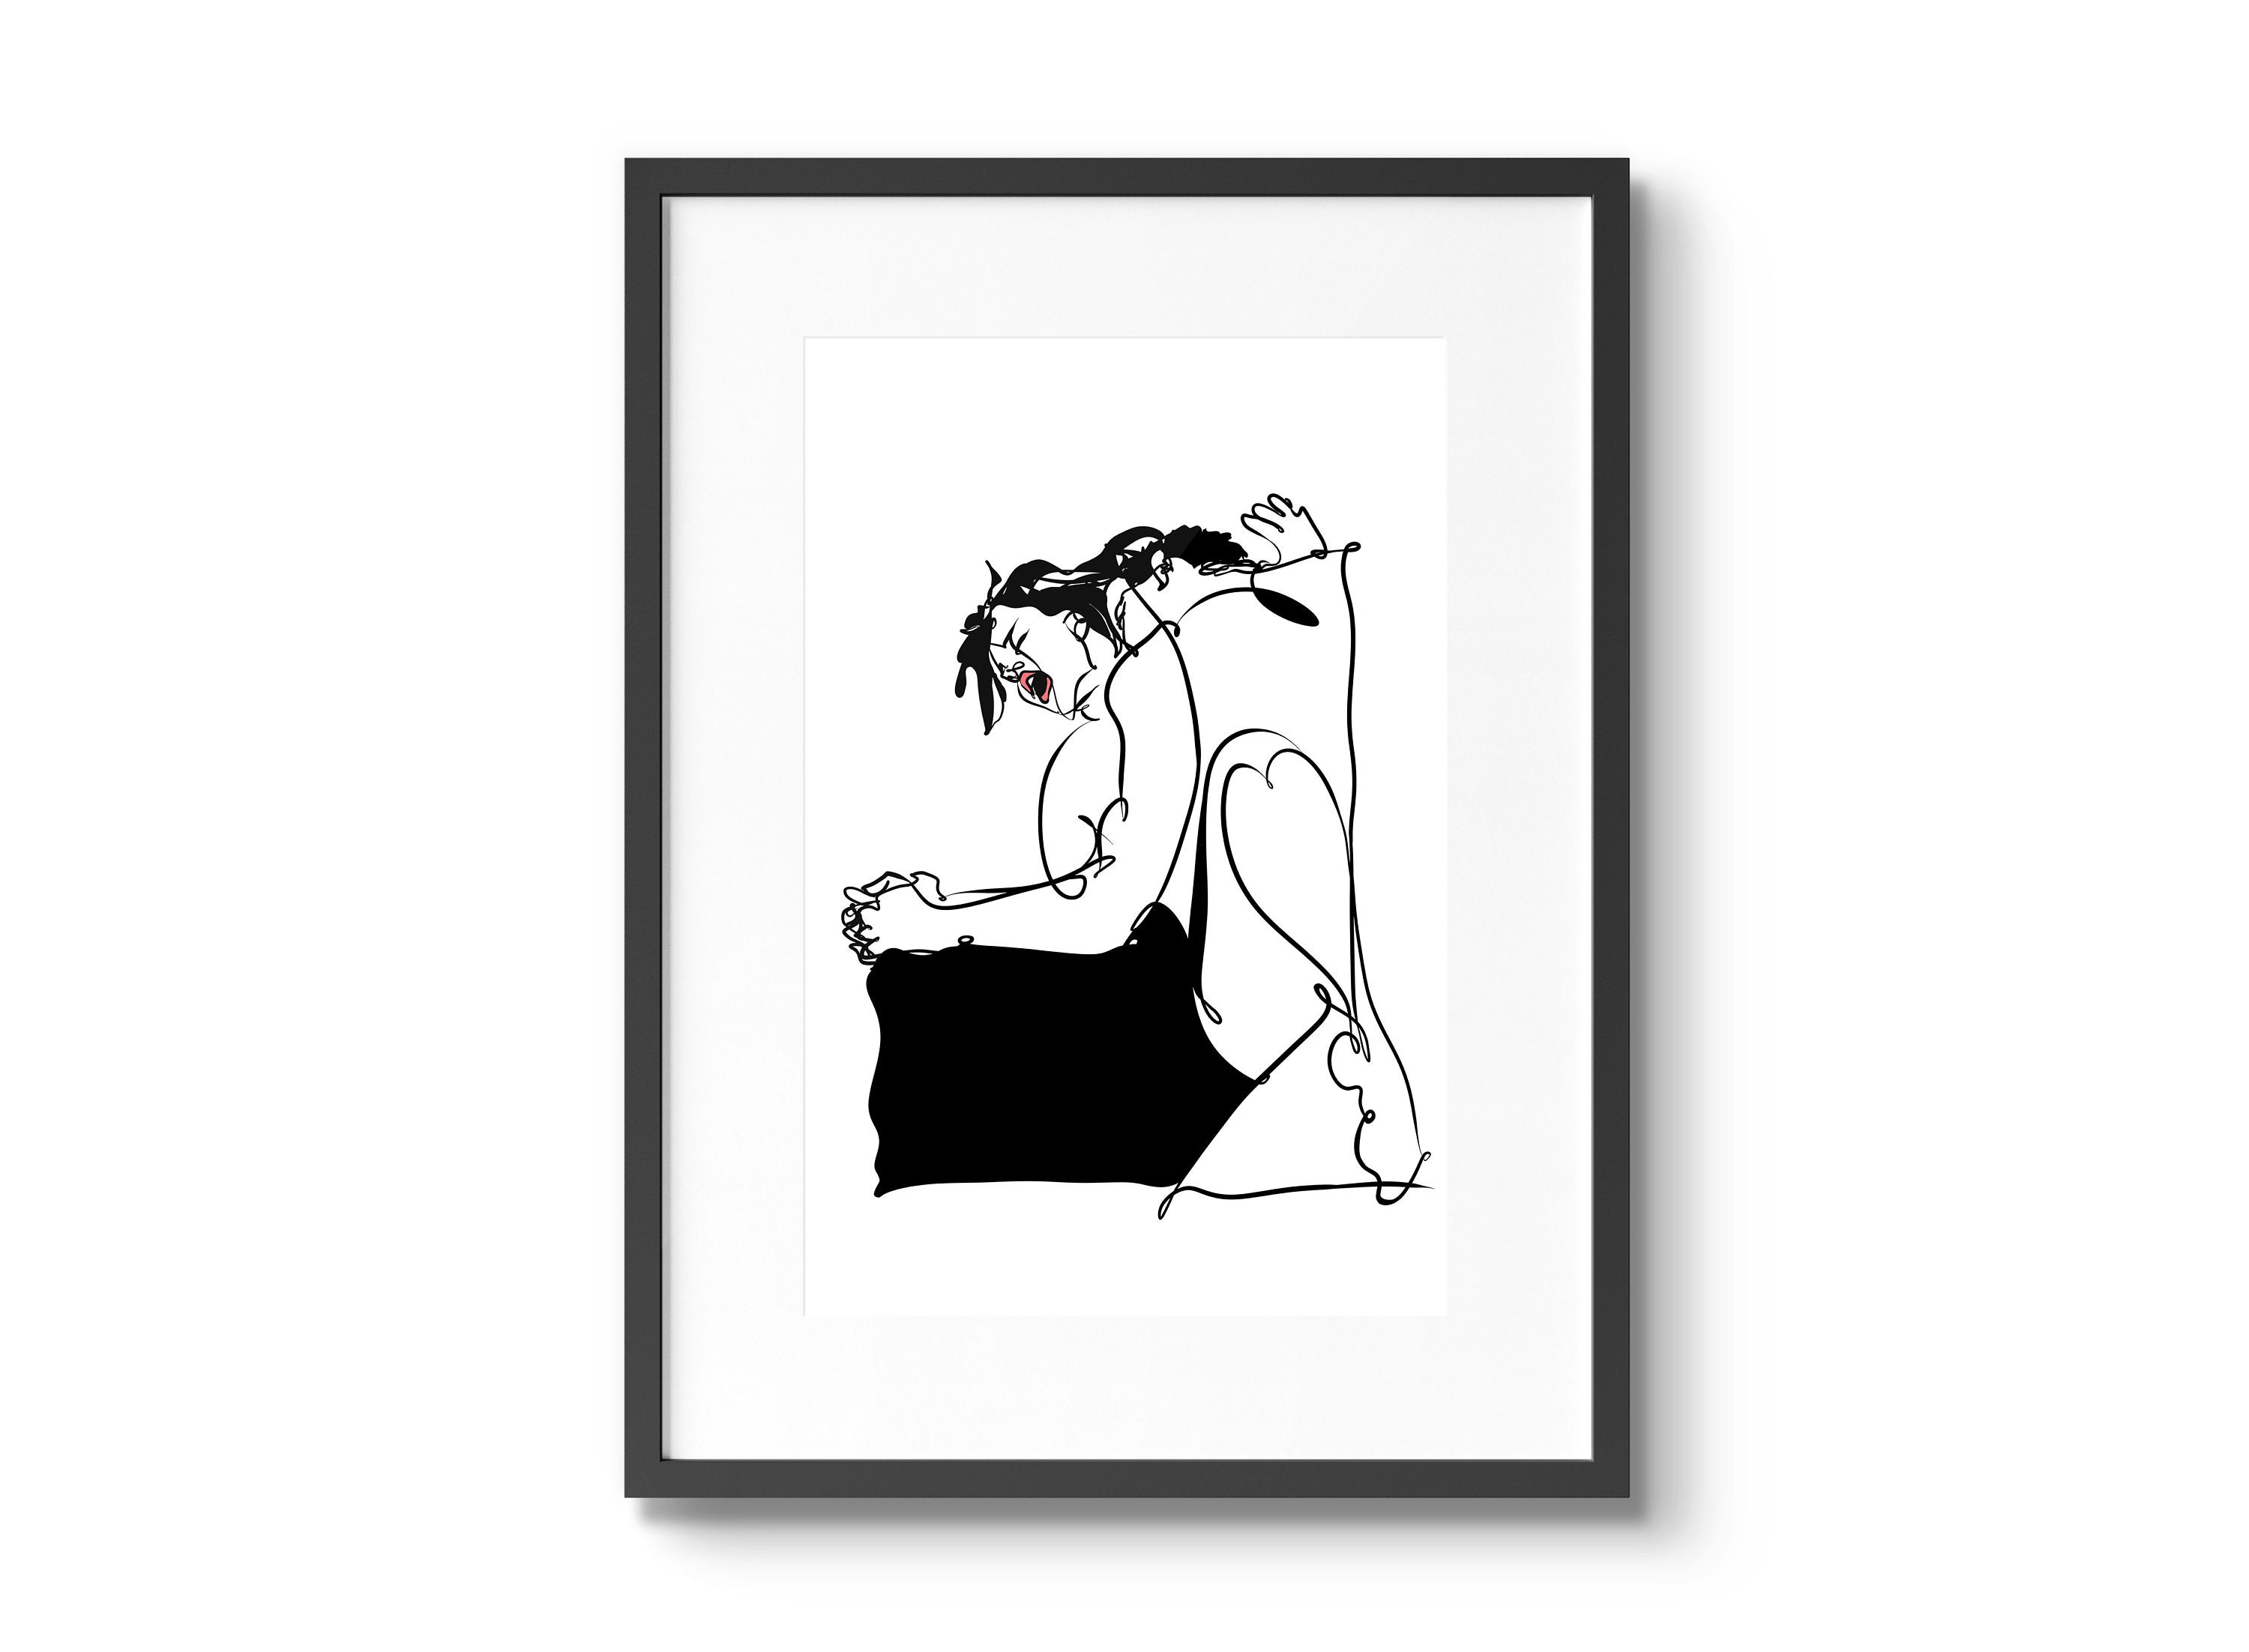 enjoying sex nude art pictures & video